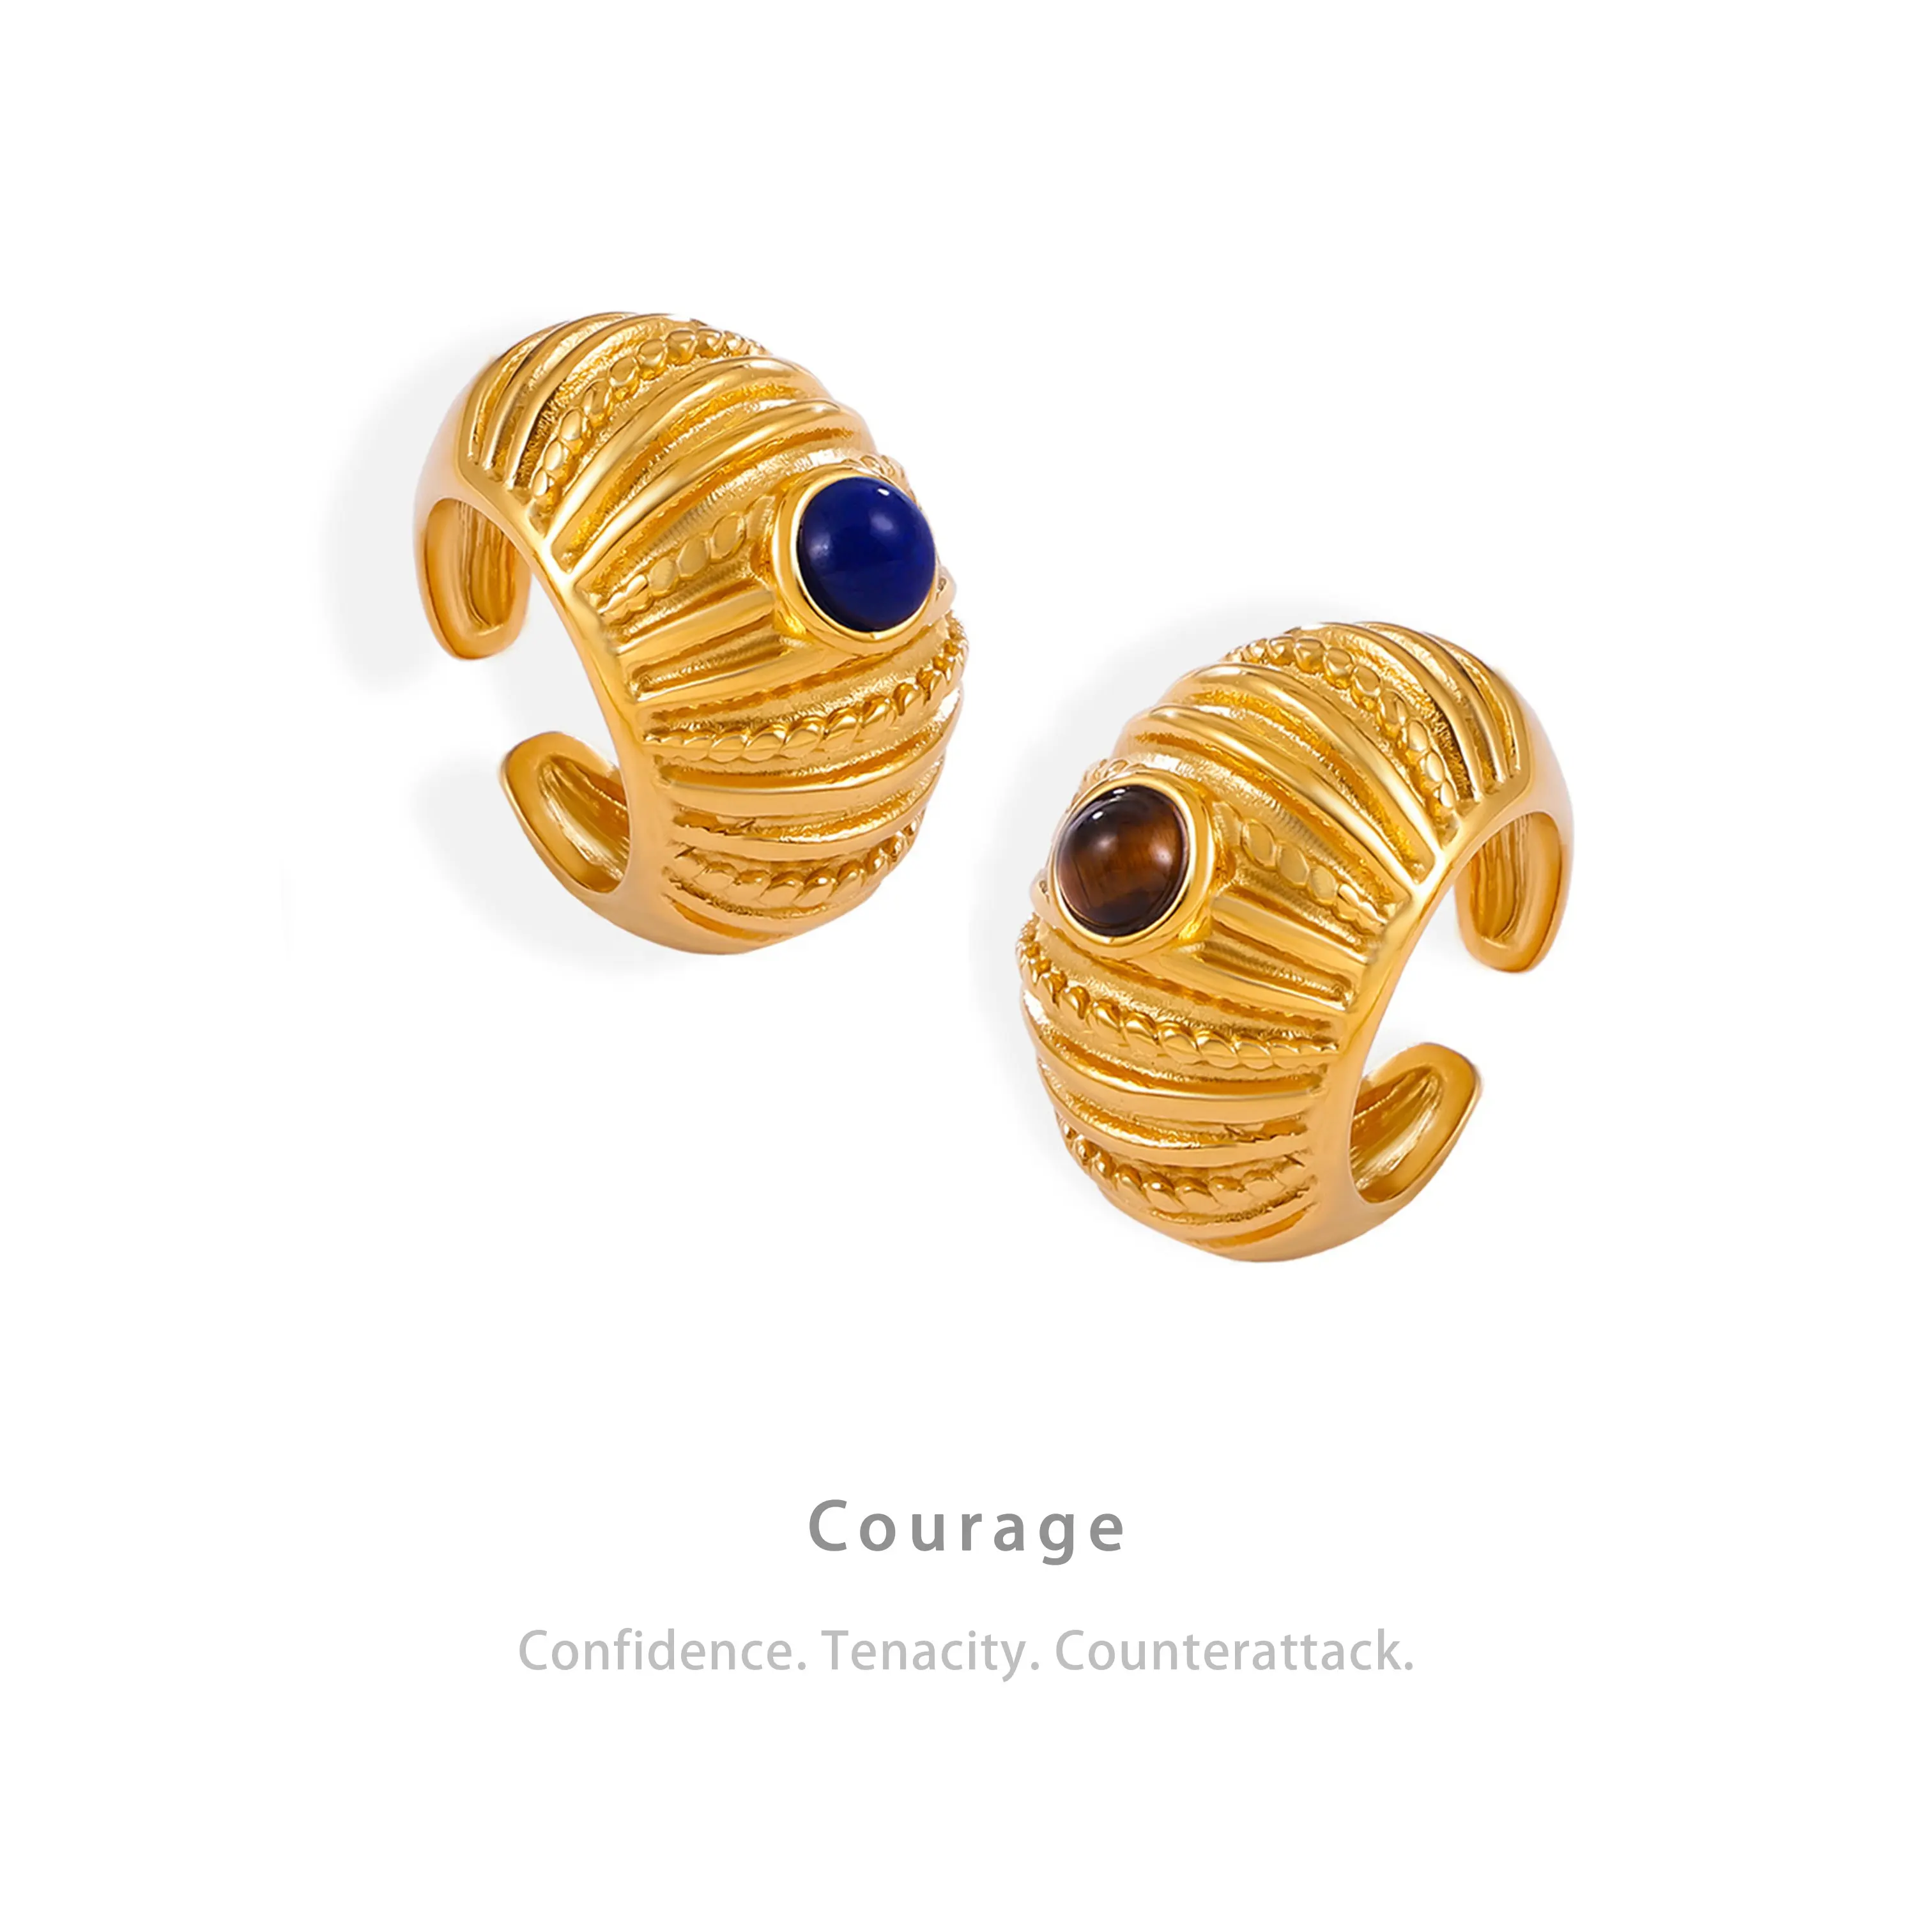 AIZL Courage Energy Schmuck Big Gold Bold Open Ring Vintage Ring 18 Karat vergoldete Edelstahl ringe